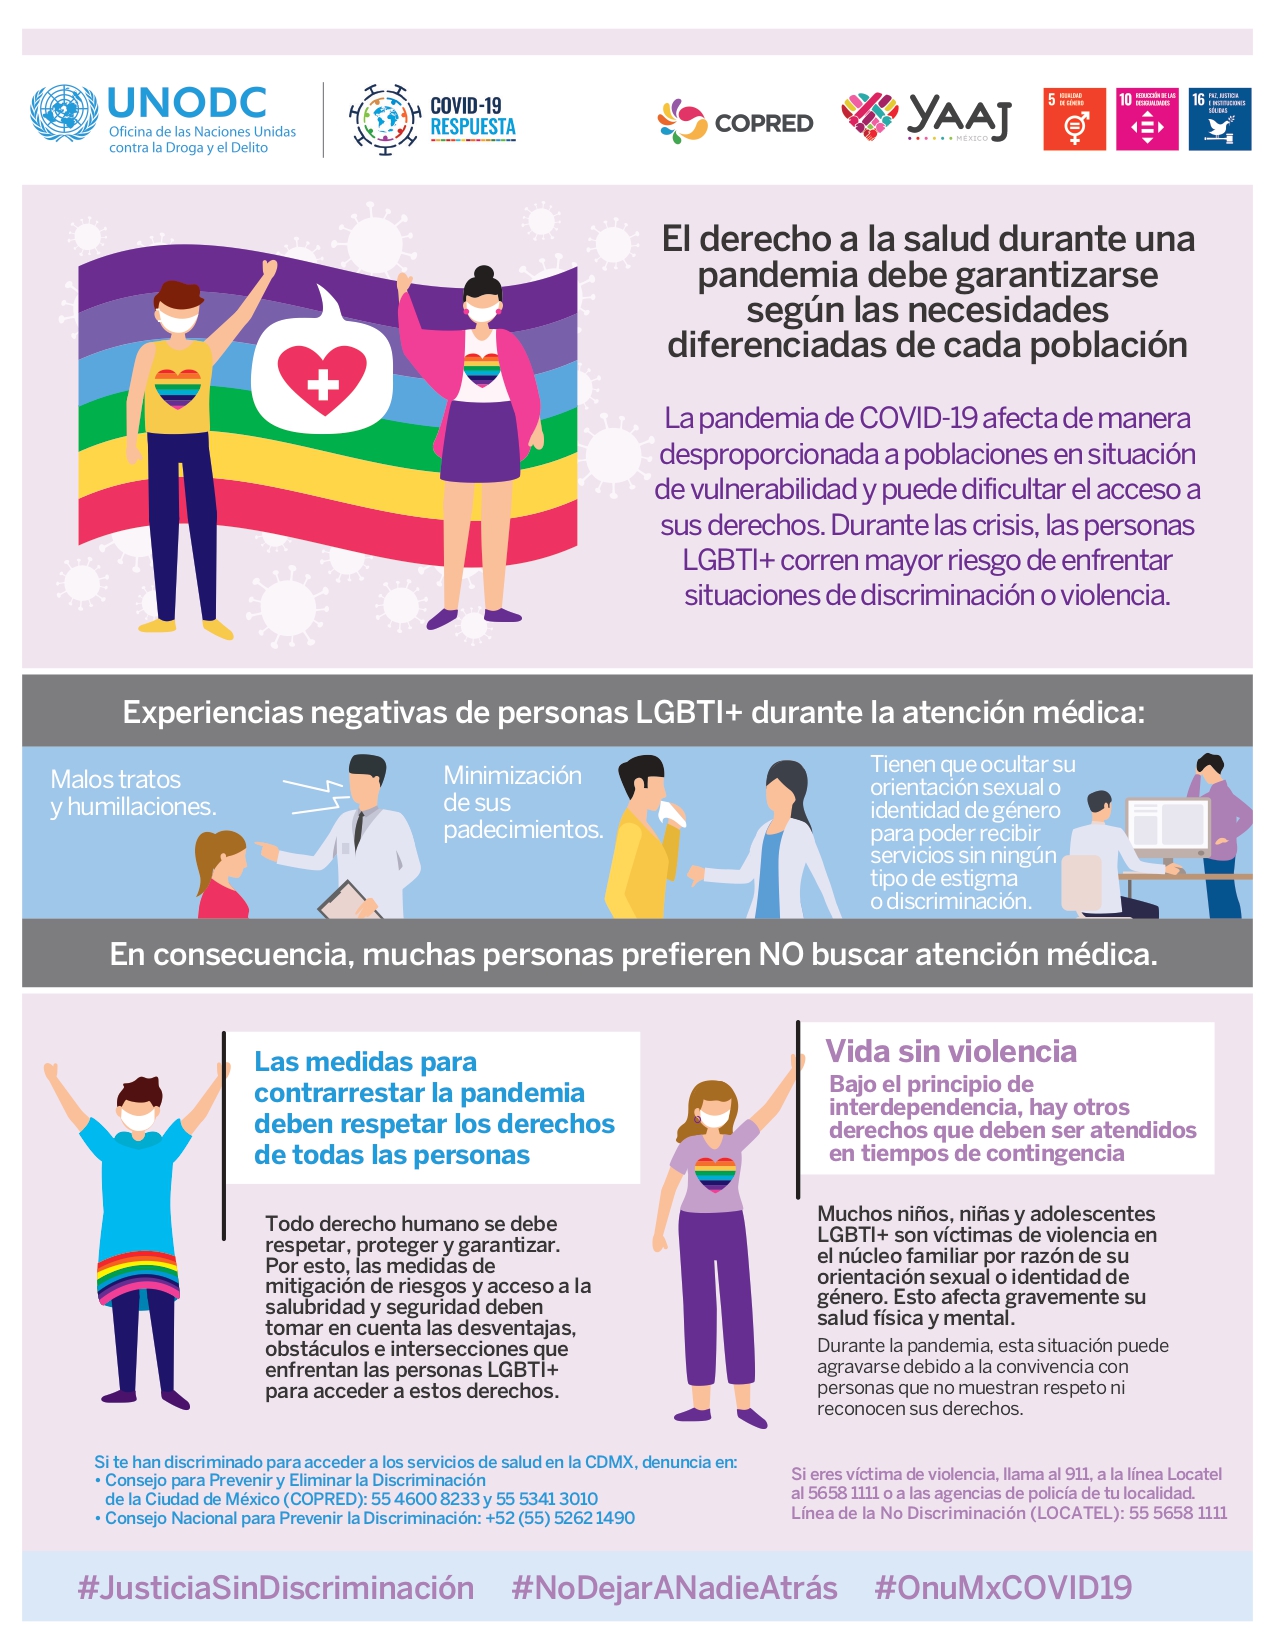 /lpomex/uploads/images/Campañas/JusticiaSinDiscriminacion/2_UNODC_Infografia_Atencion_diferenciada_a_LGBTIQ_durante_la_pandemia_2023_page-0001.jpg